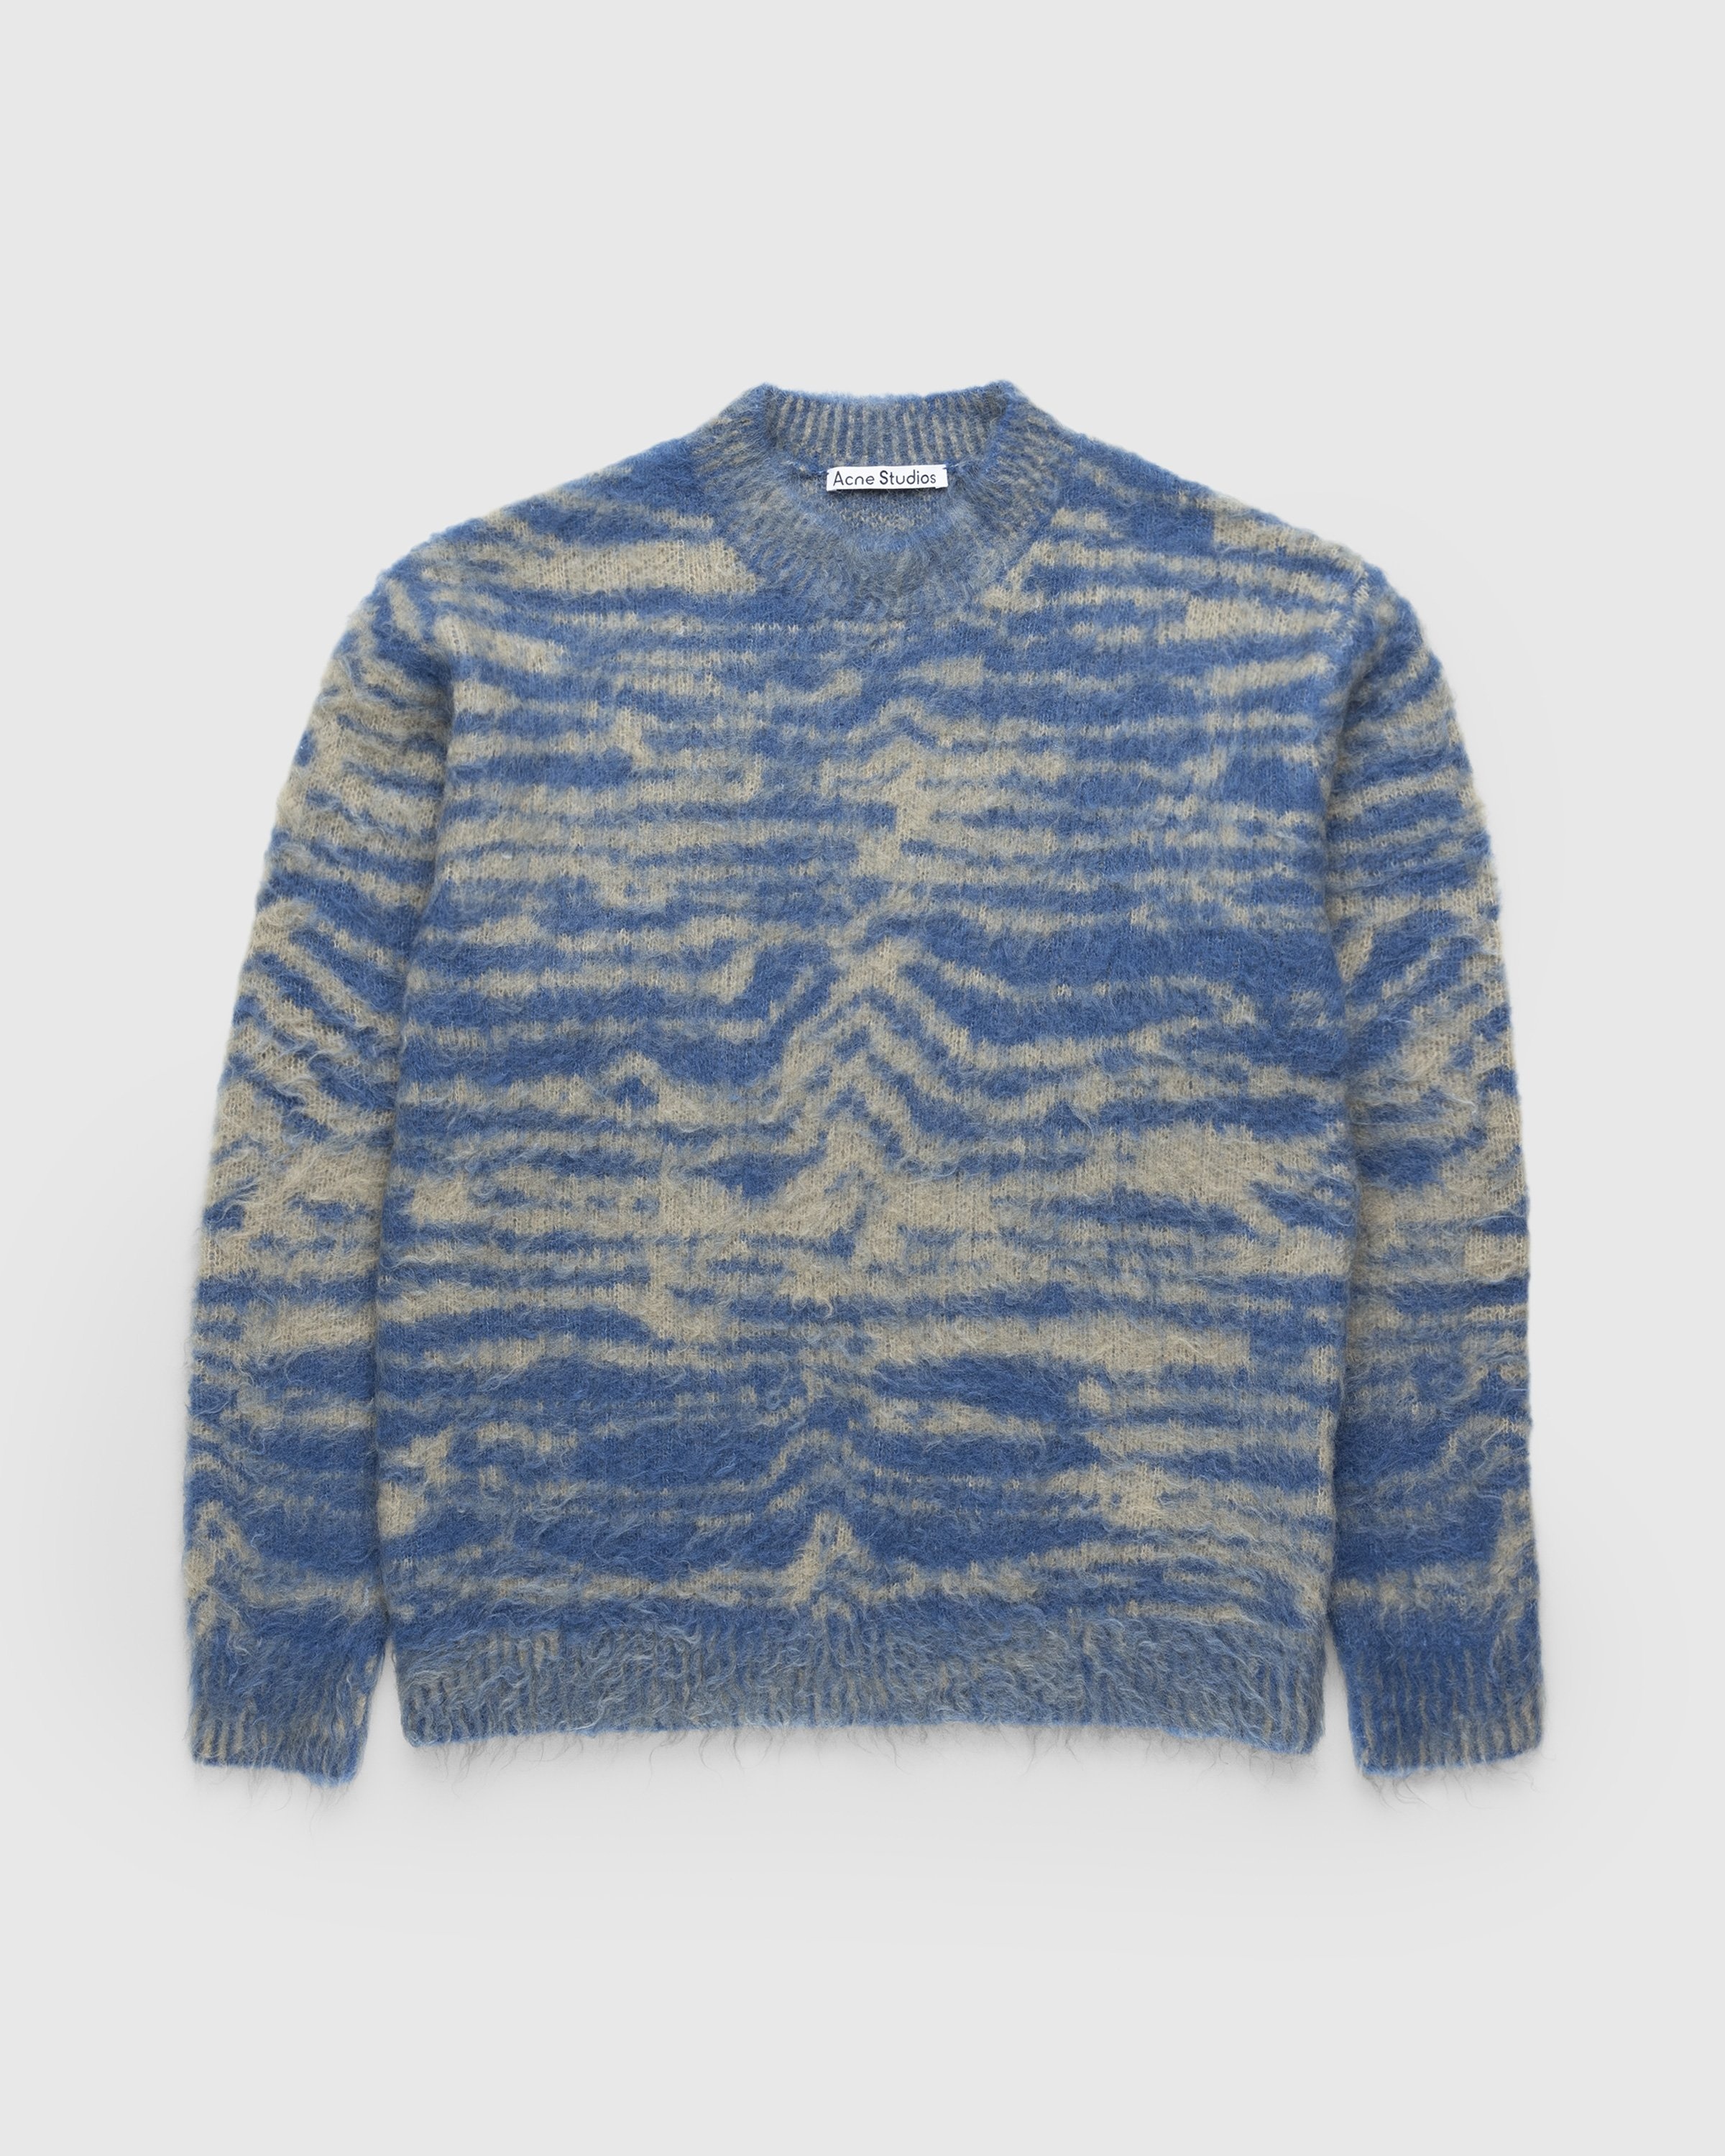 Acne Studios – Jacquard Crewneck Sweater Blue | Highsnobiety Shop